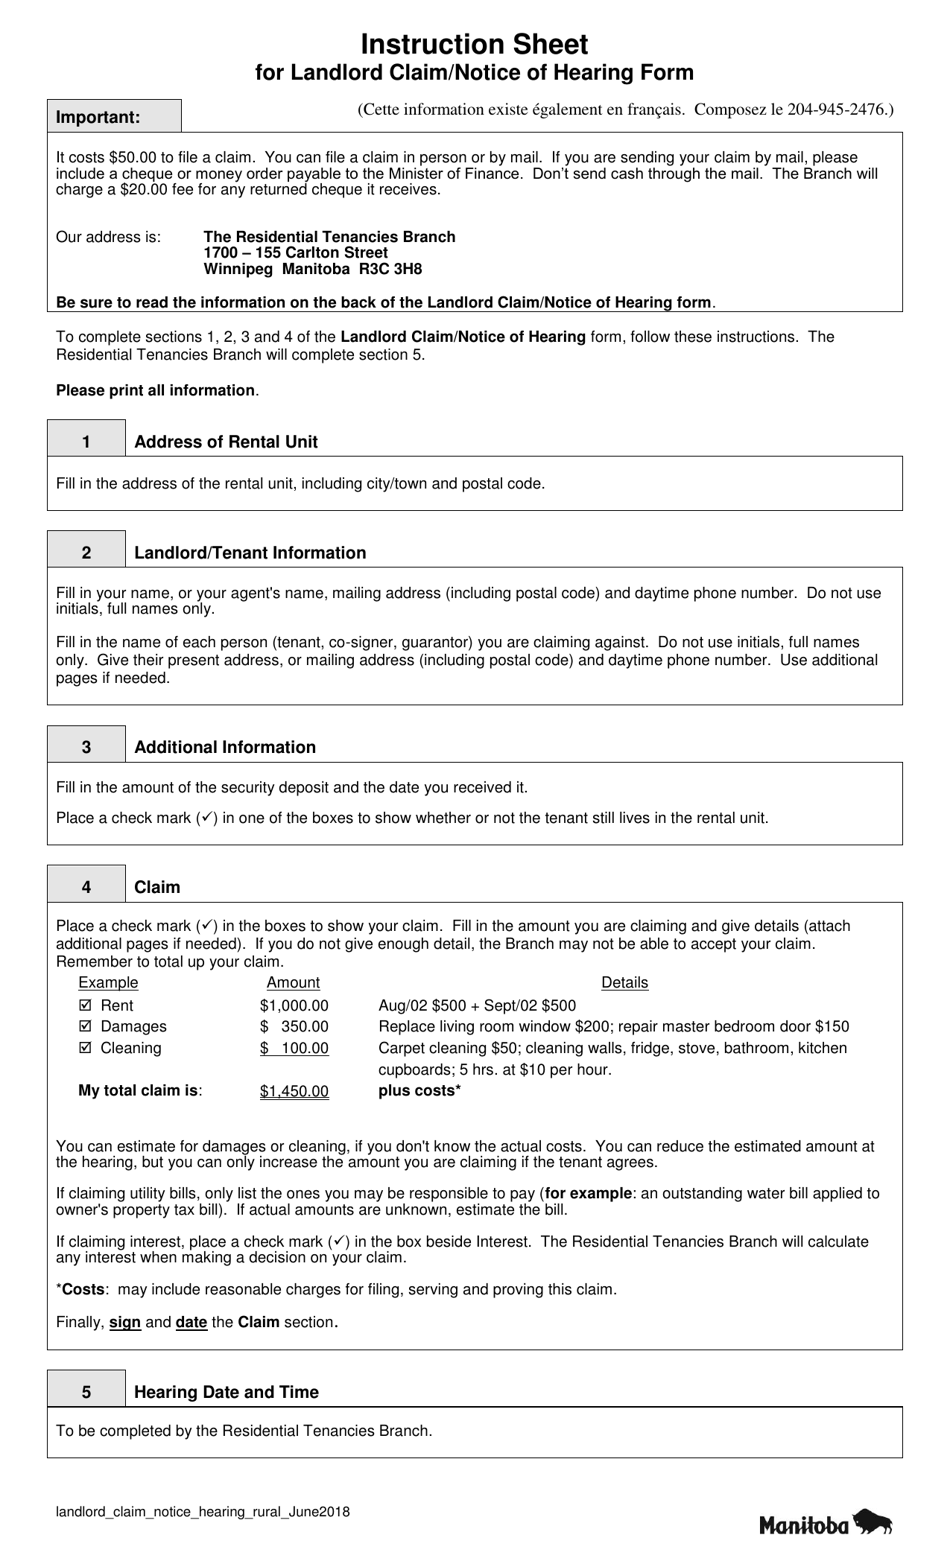 Landlord Claim / Notice of Hearing Form - Winnipeg - Manitoba, Canada, Page 1